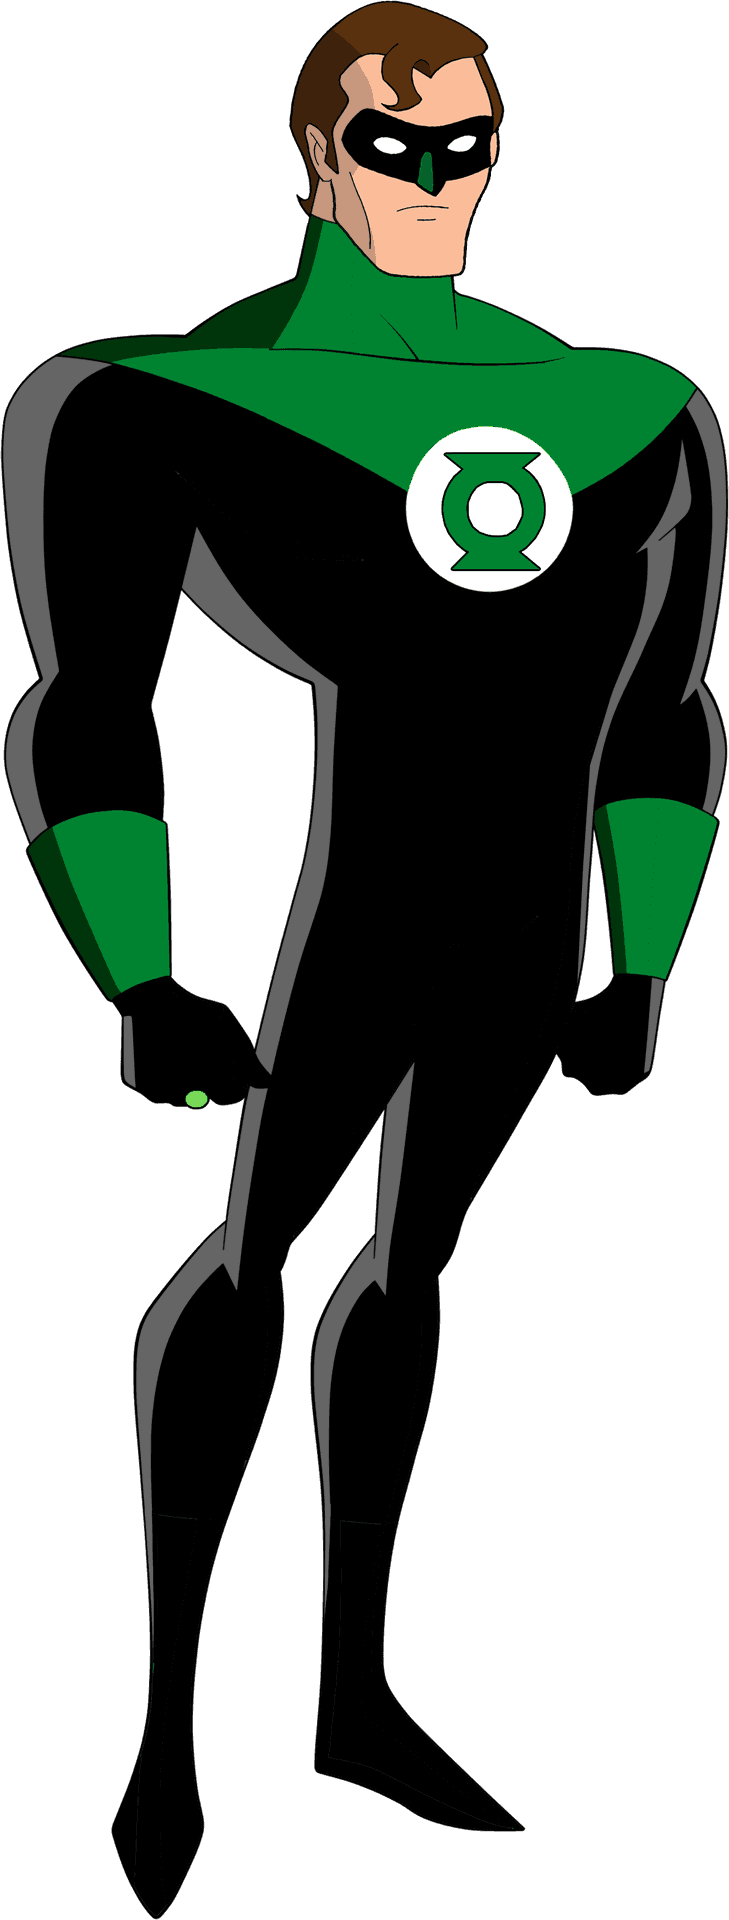 Green Lantern Animated Standing Pose PNG